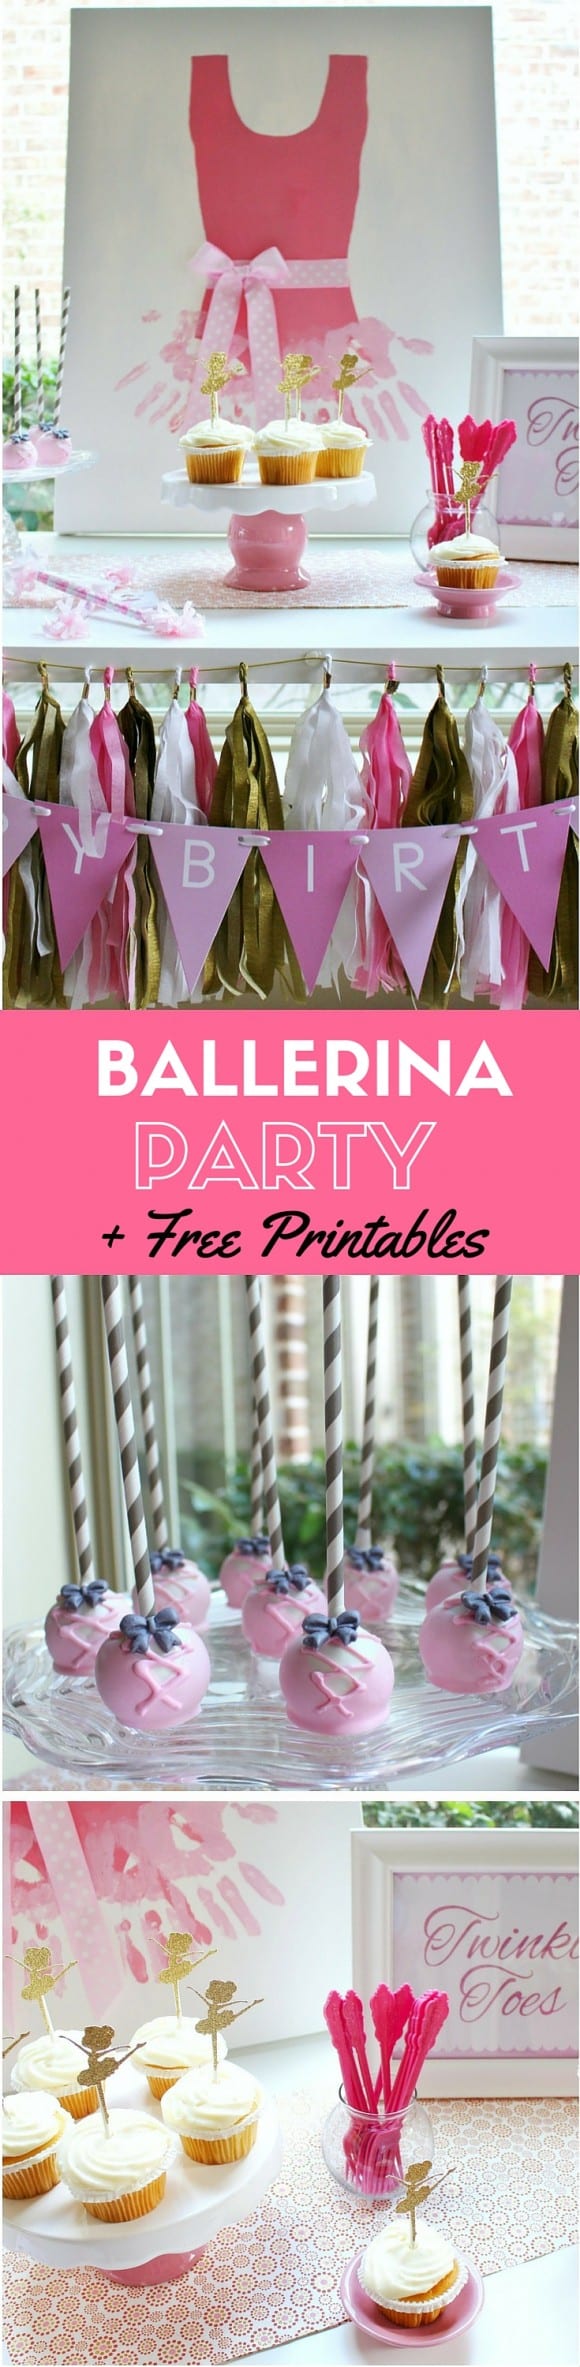 Ballerina Party Ideas + Free Printables | CatchMyParty.com